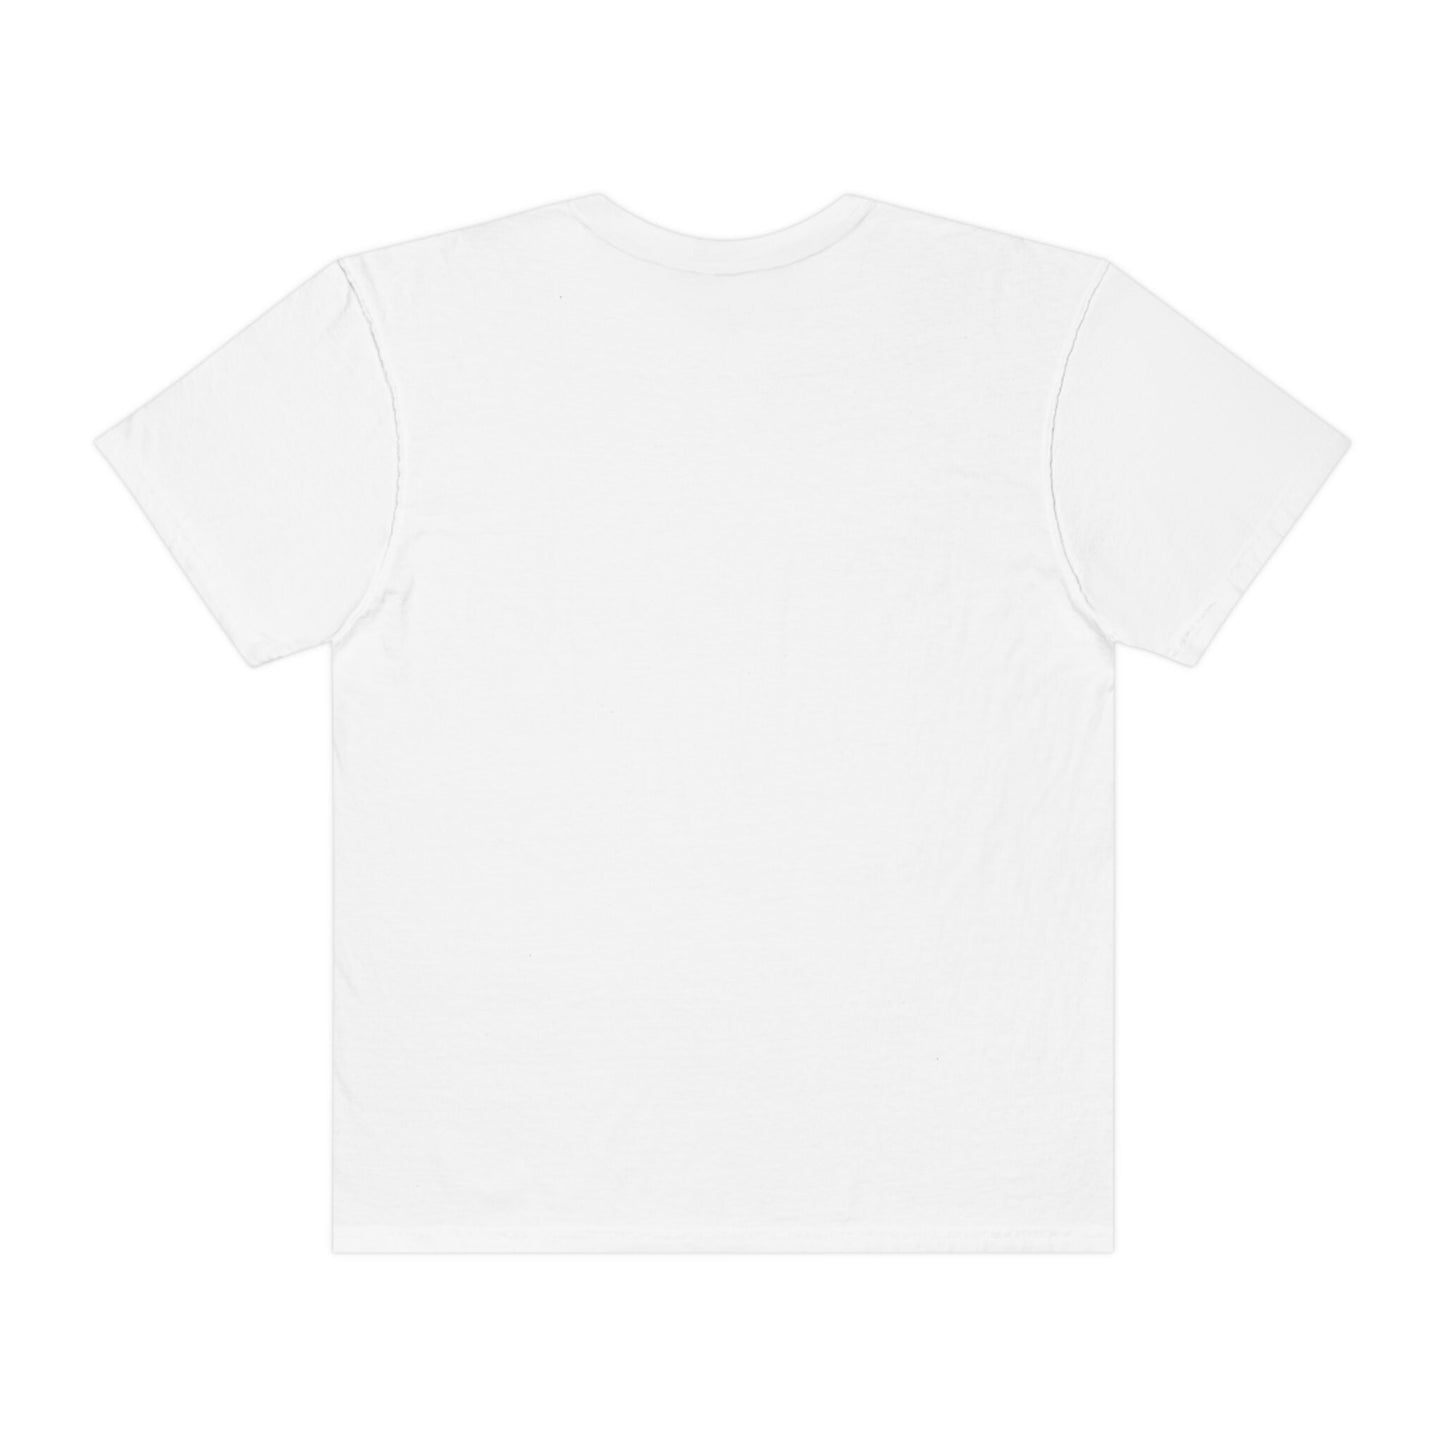 SUNSOAK "logo" White T-Shirt